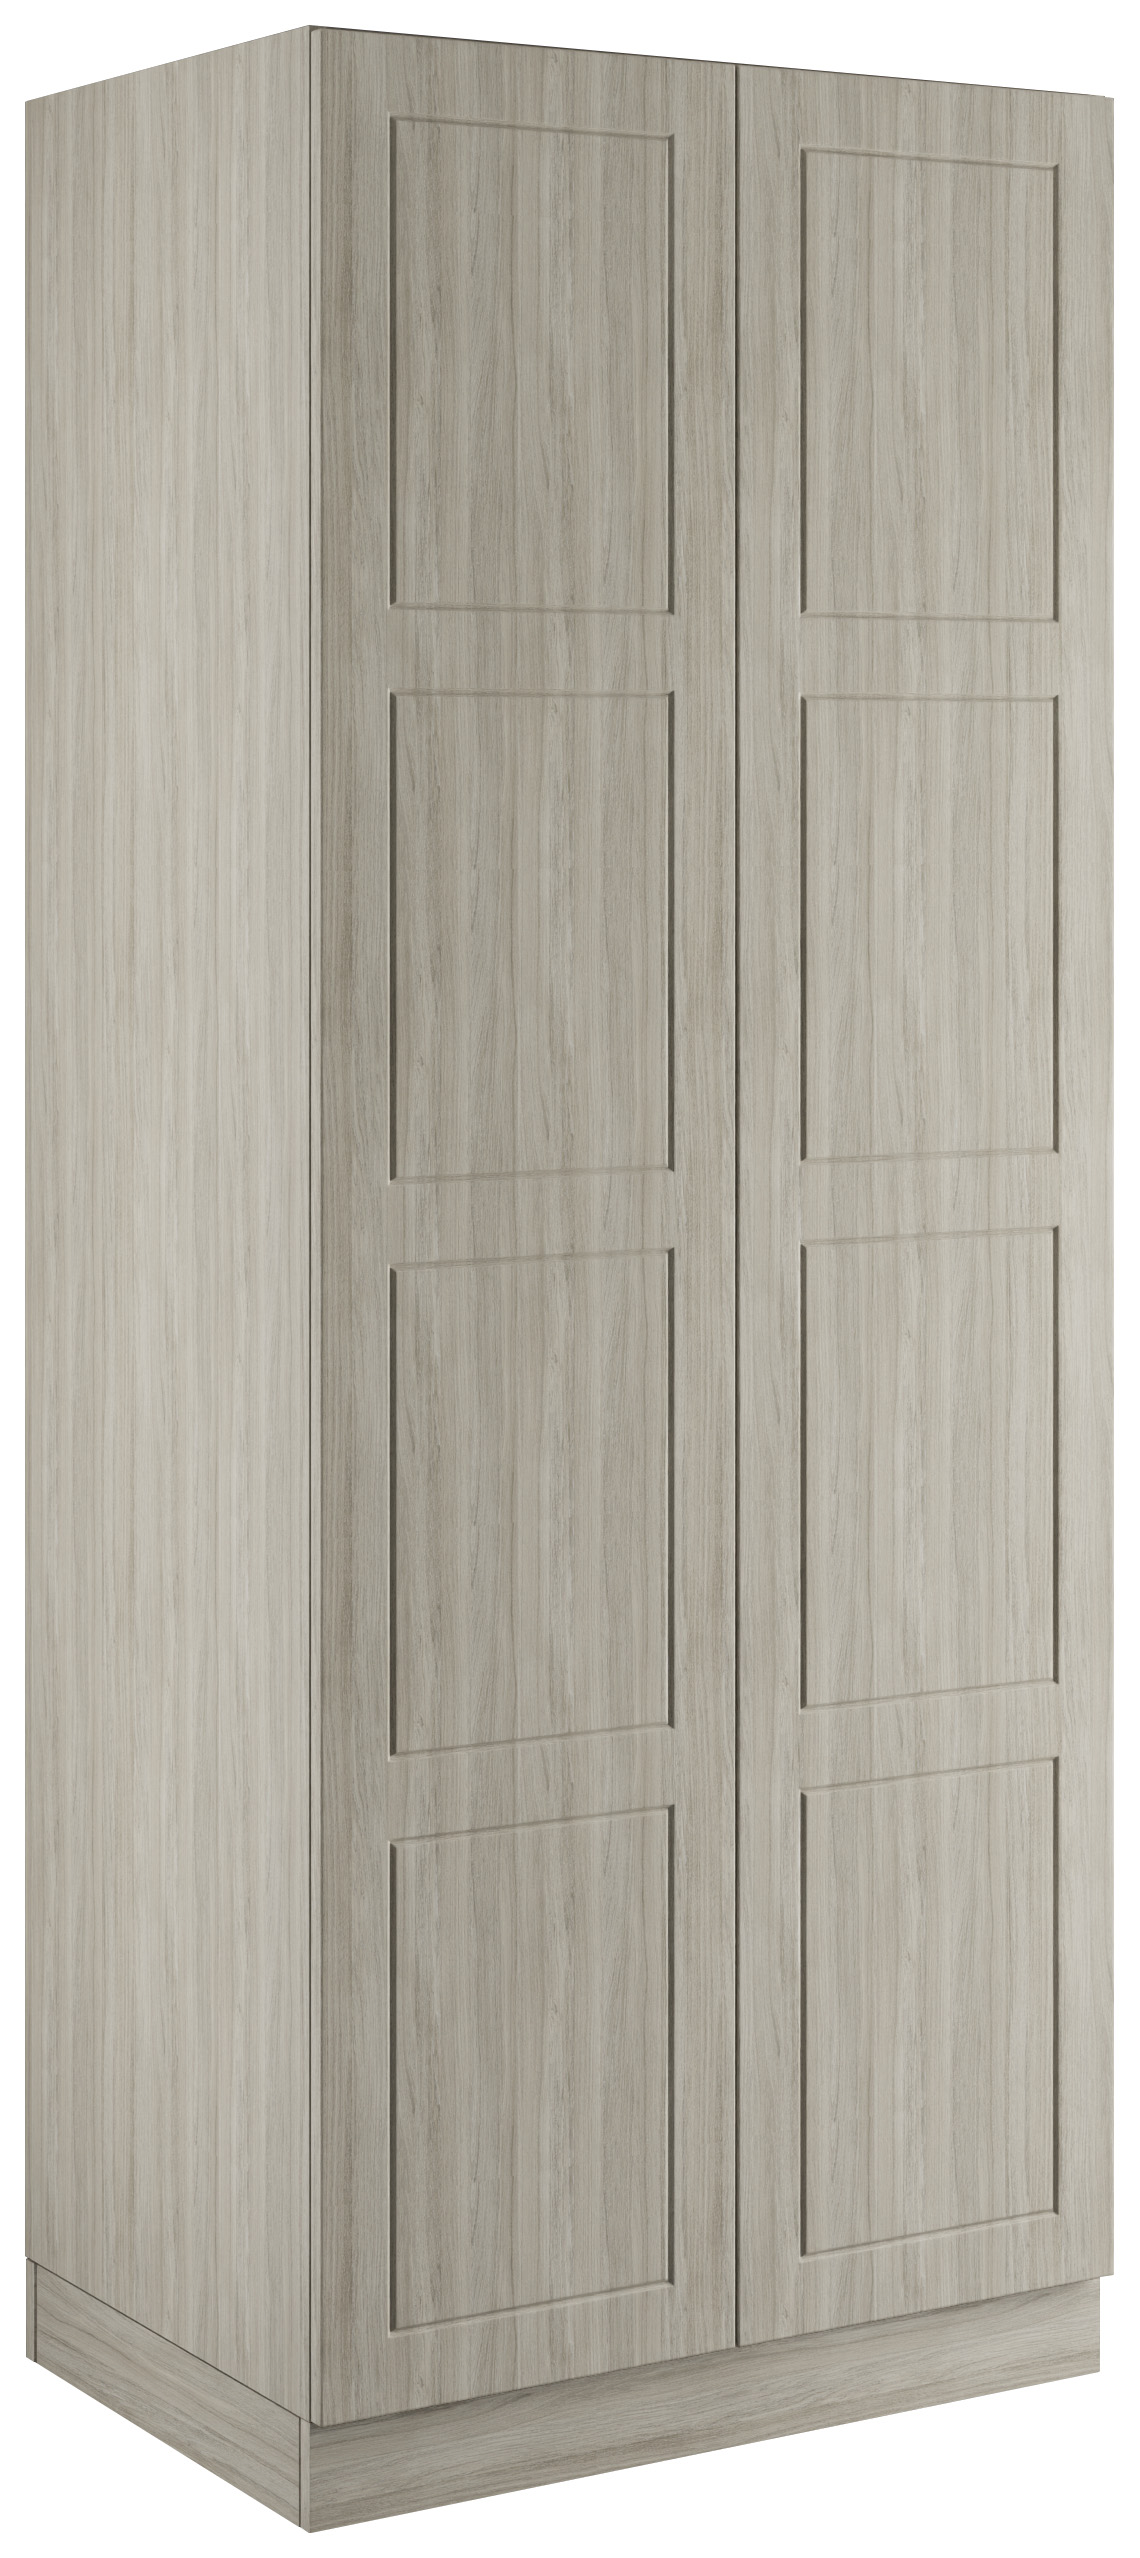 Bramham Urban Oak Double Wardrobe with Shelves - 900 x 2260 x 608mm